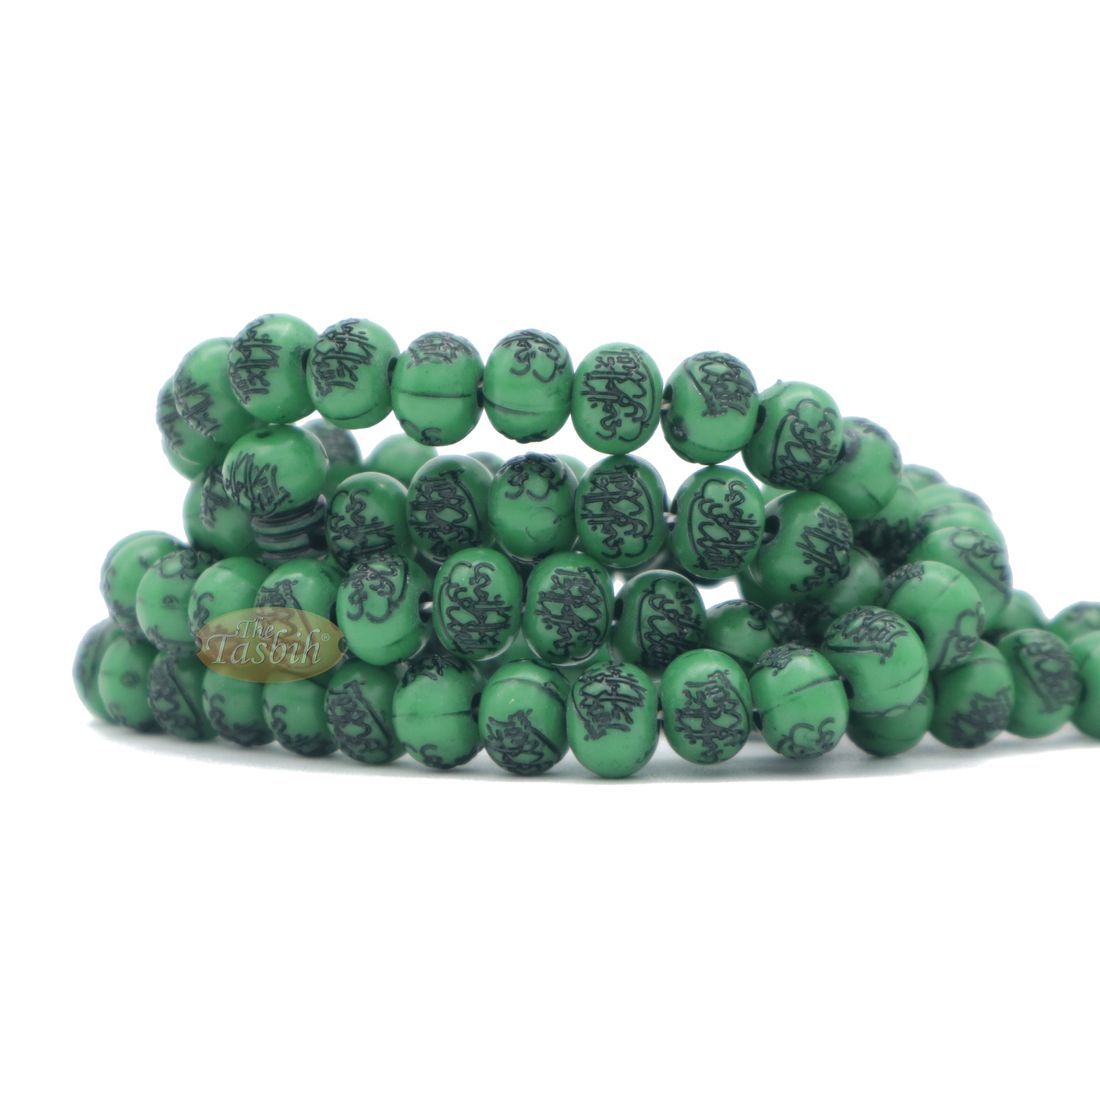 Basmallah Green Plastic Tasbih with 8mm Beads – Sturdy Prayer Beads – BismillahirRahmanirRahim on Each Bead